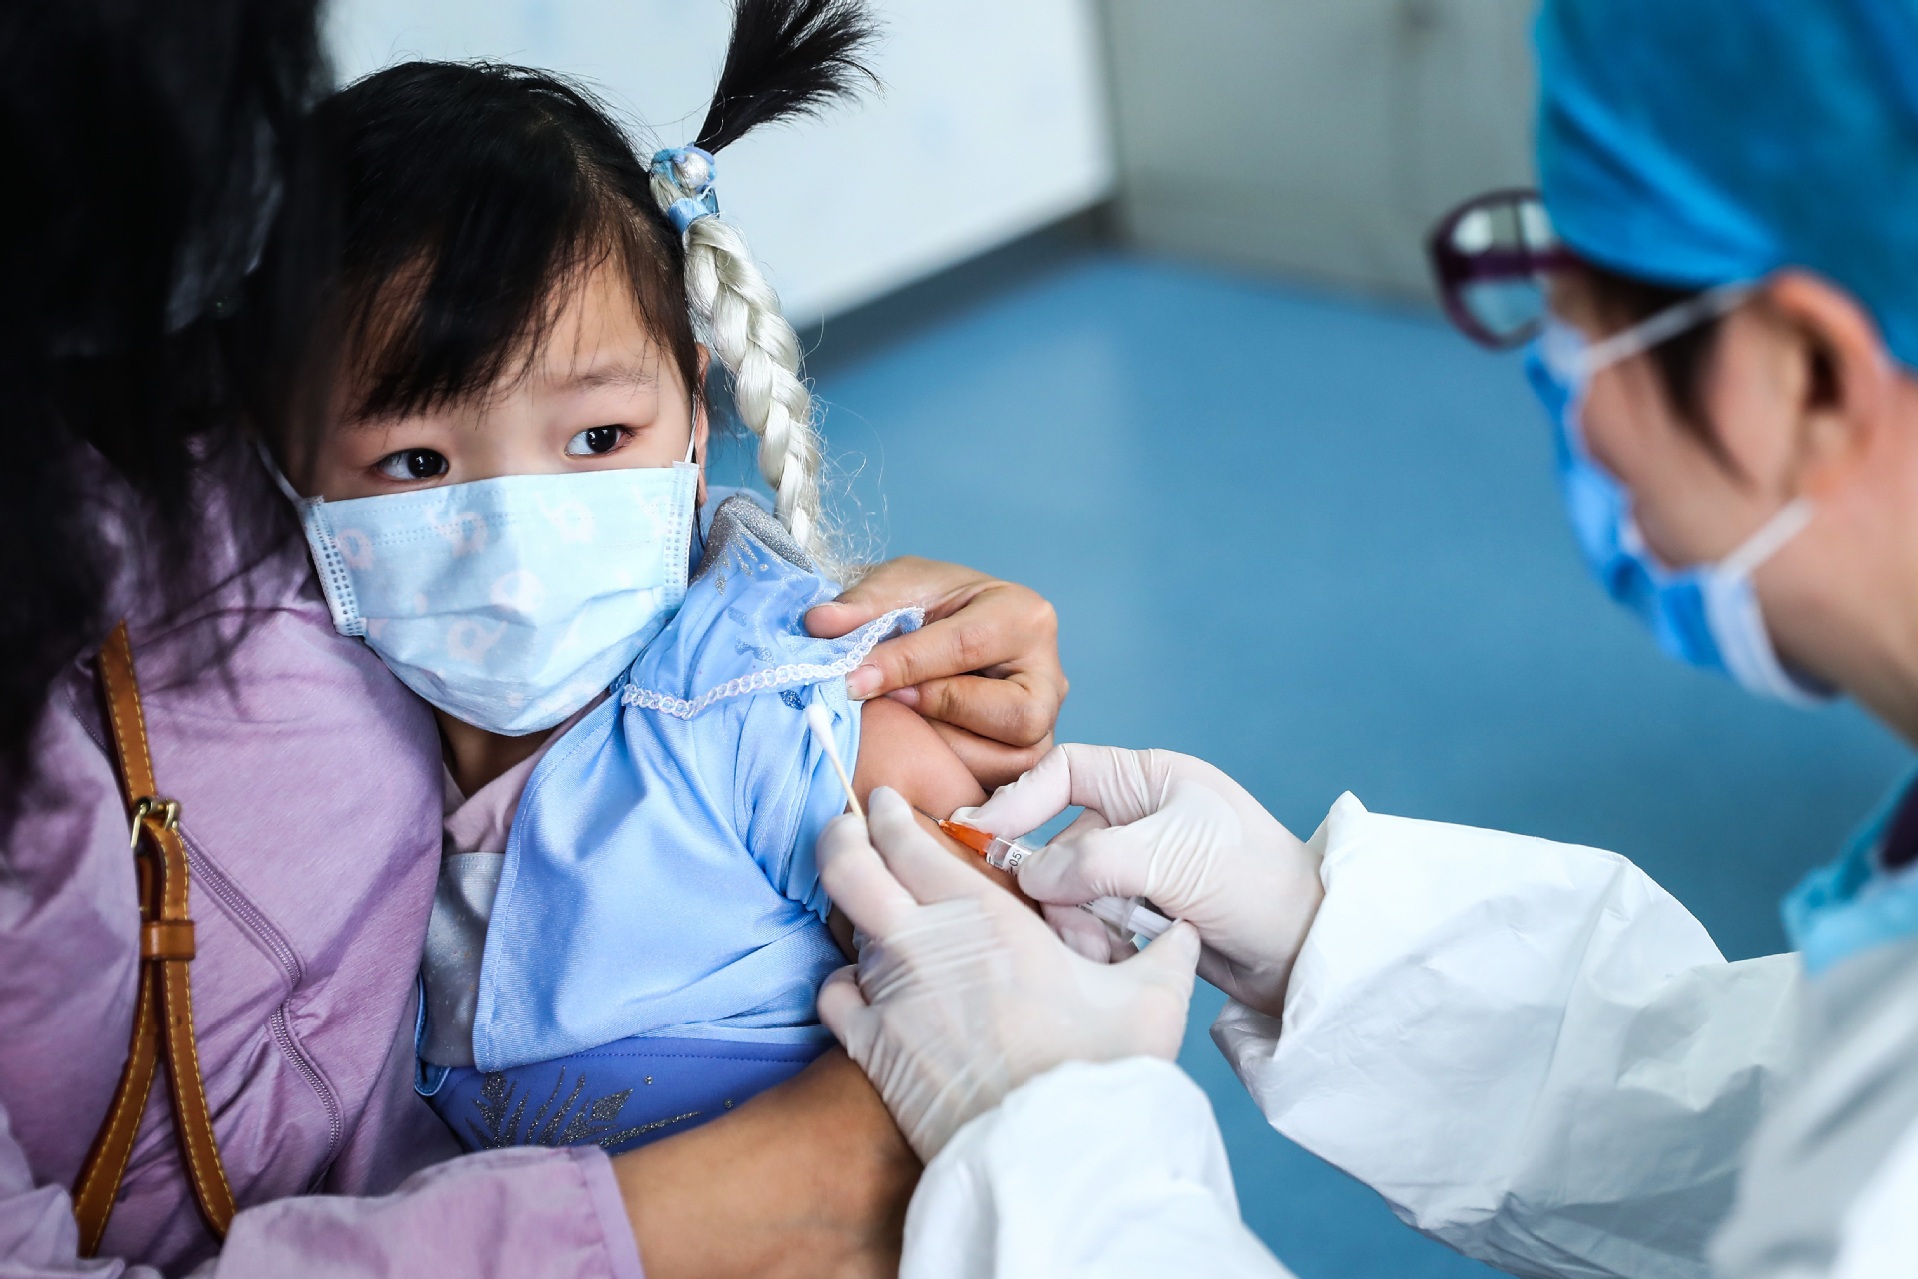 A child receives a vaccine shot at a health center